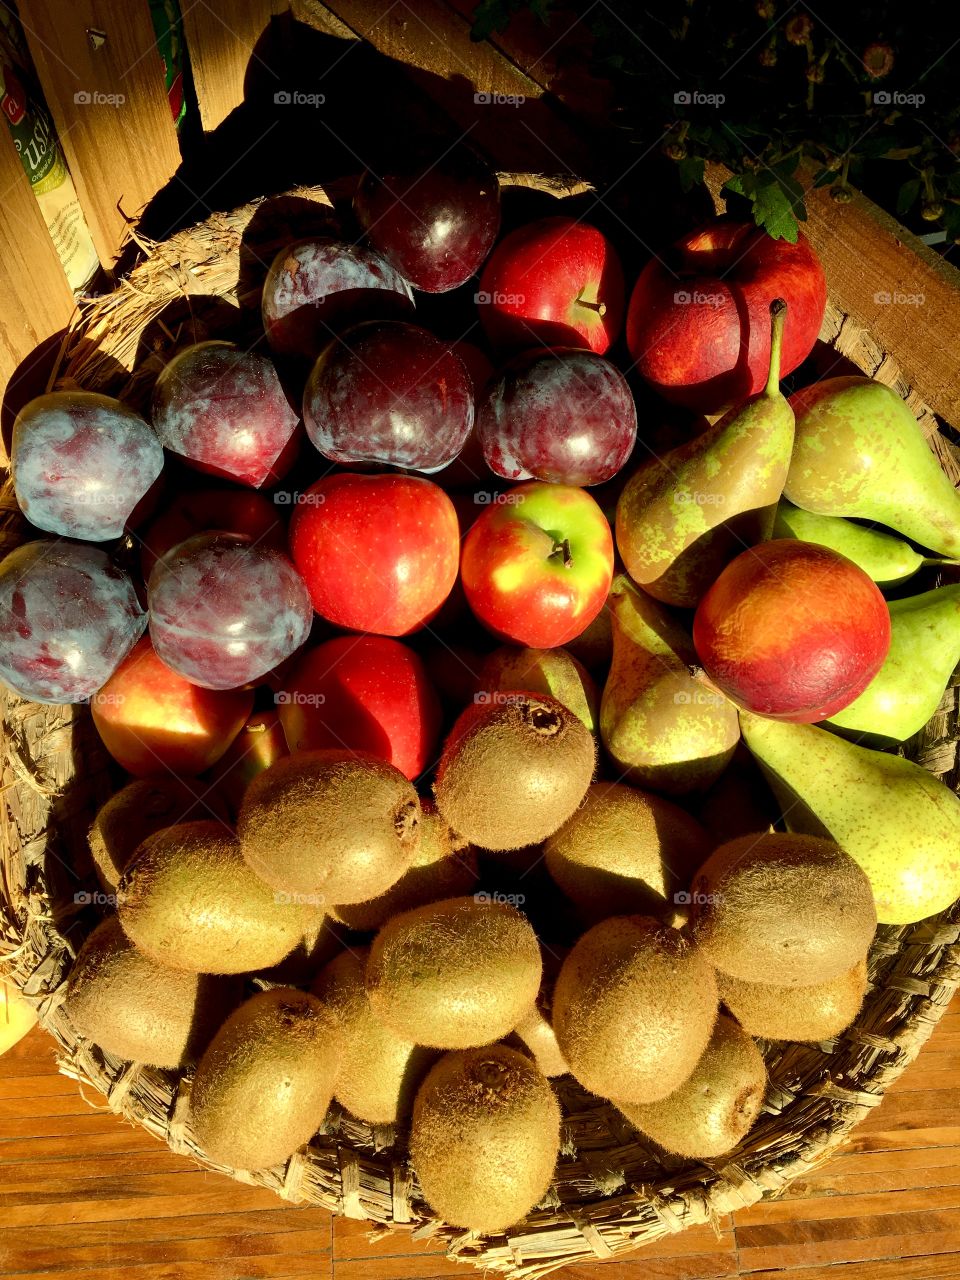 Fruit is health